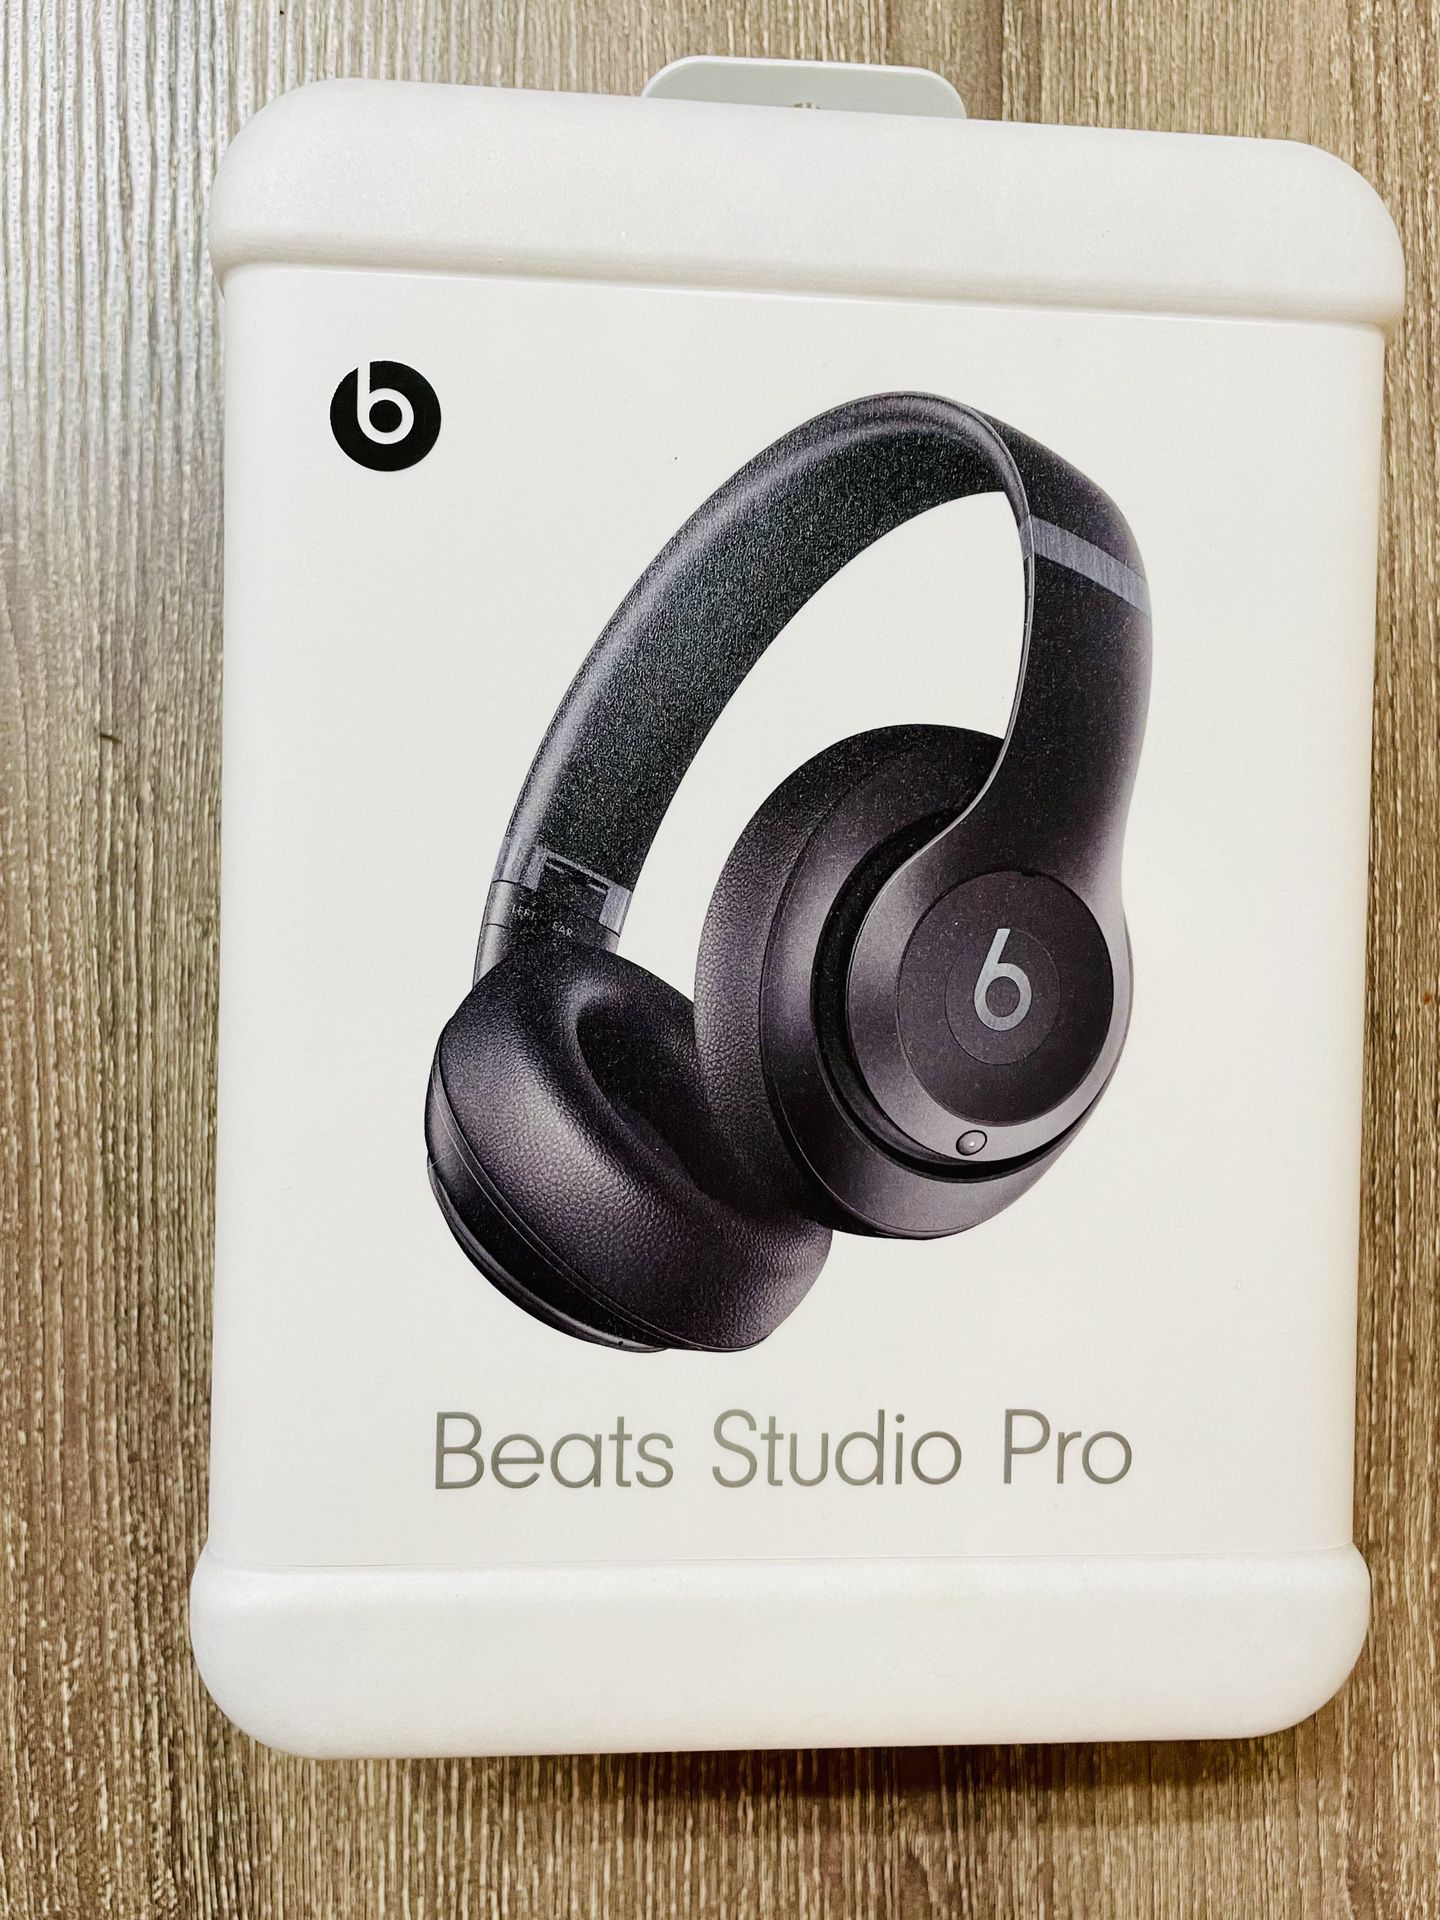 Beats Studio Pro Bluetooth Headphones 